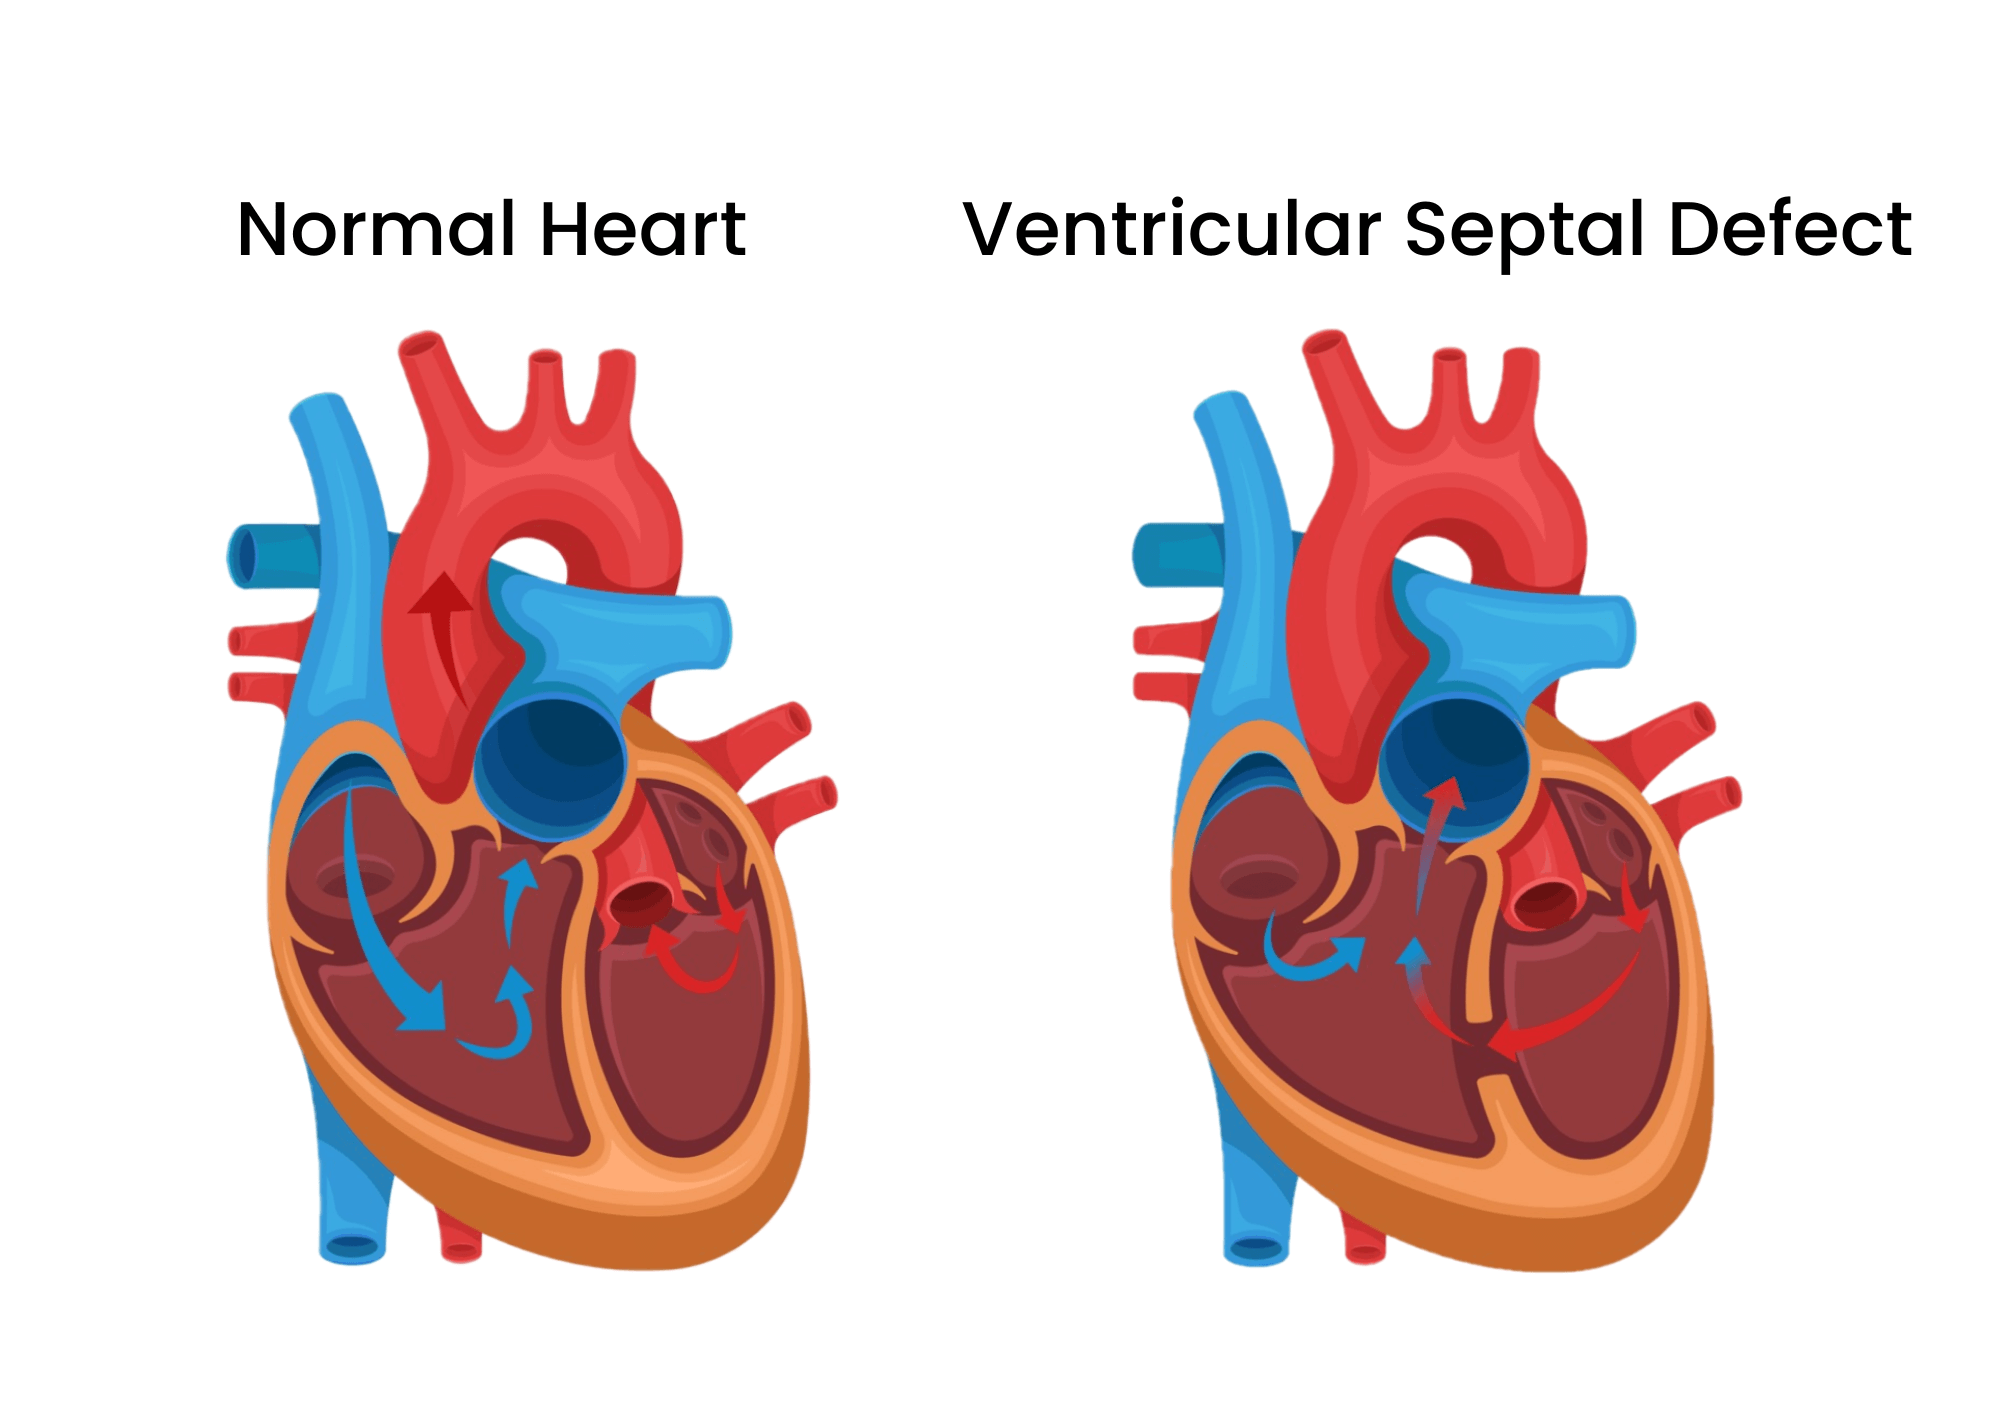 Ventricular Septal Defects (VSD)